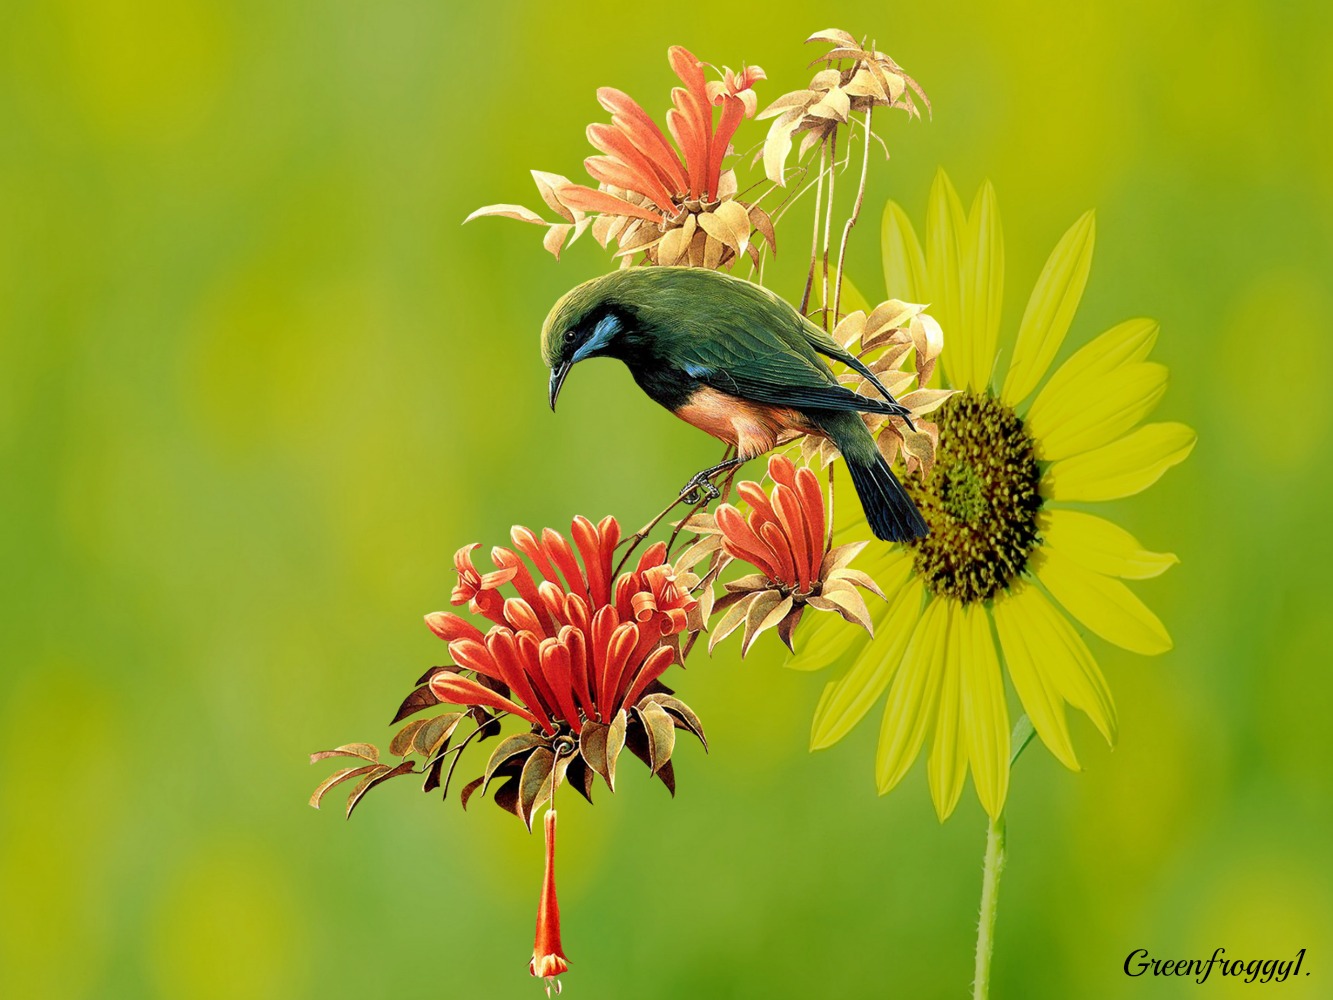 BIRD ON FLOWERS by GREENFROGGY1